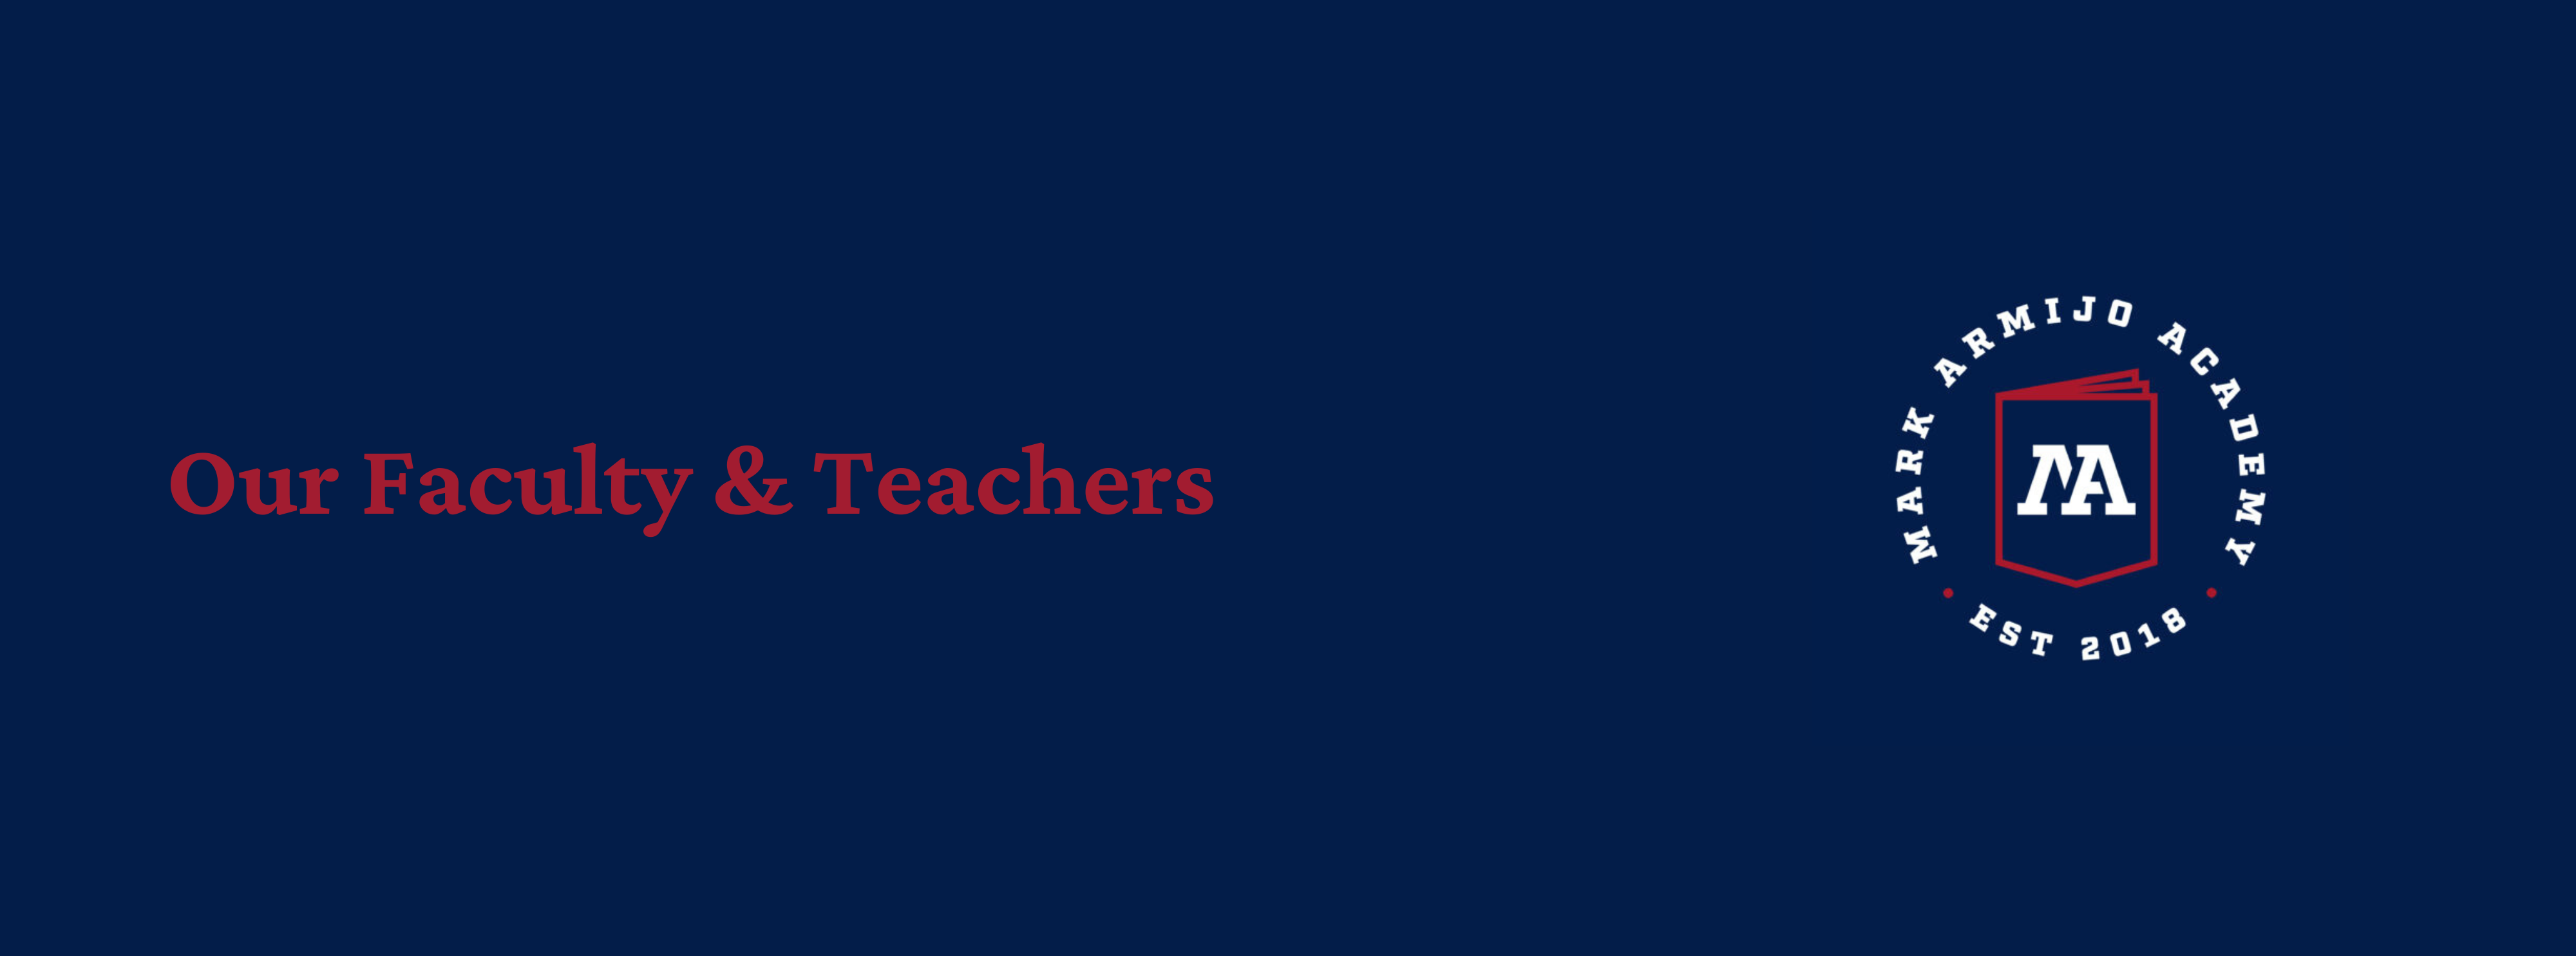 Website banner "Our Faculty & Teachers"